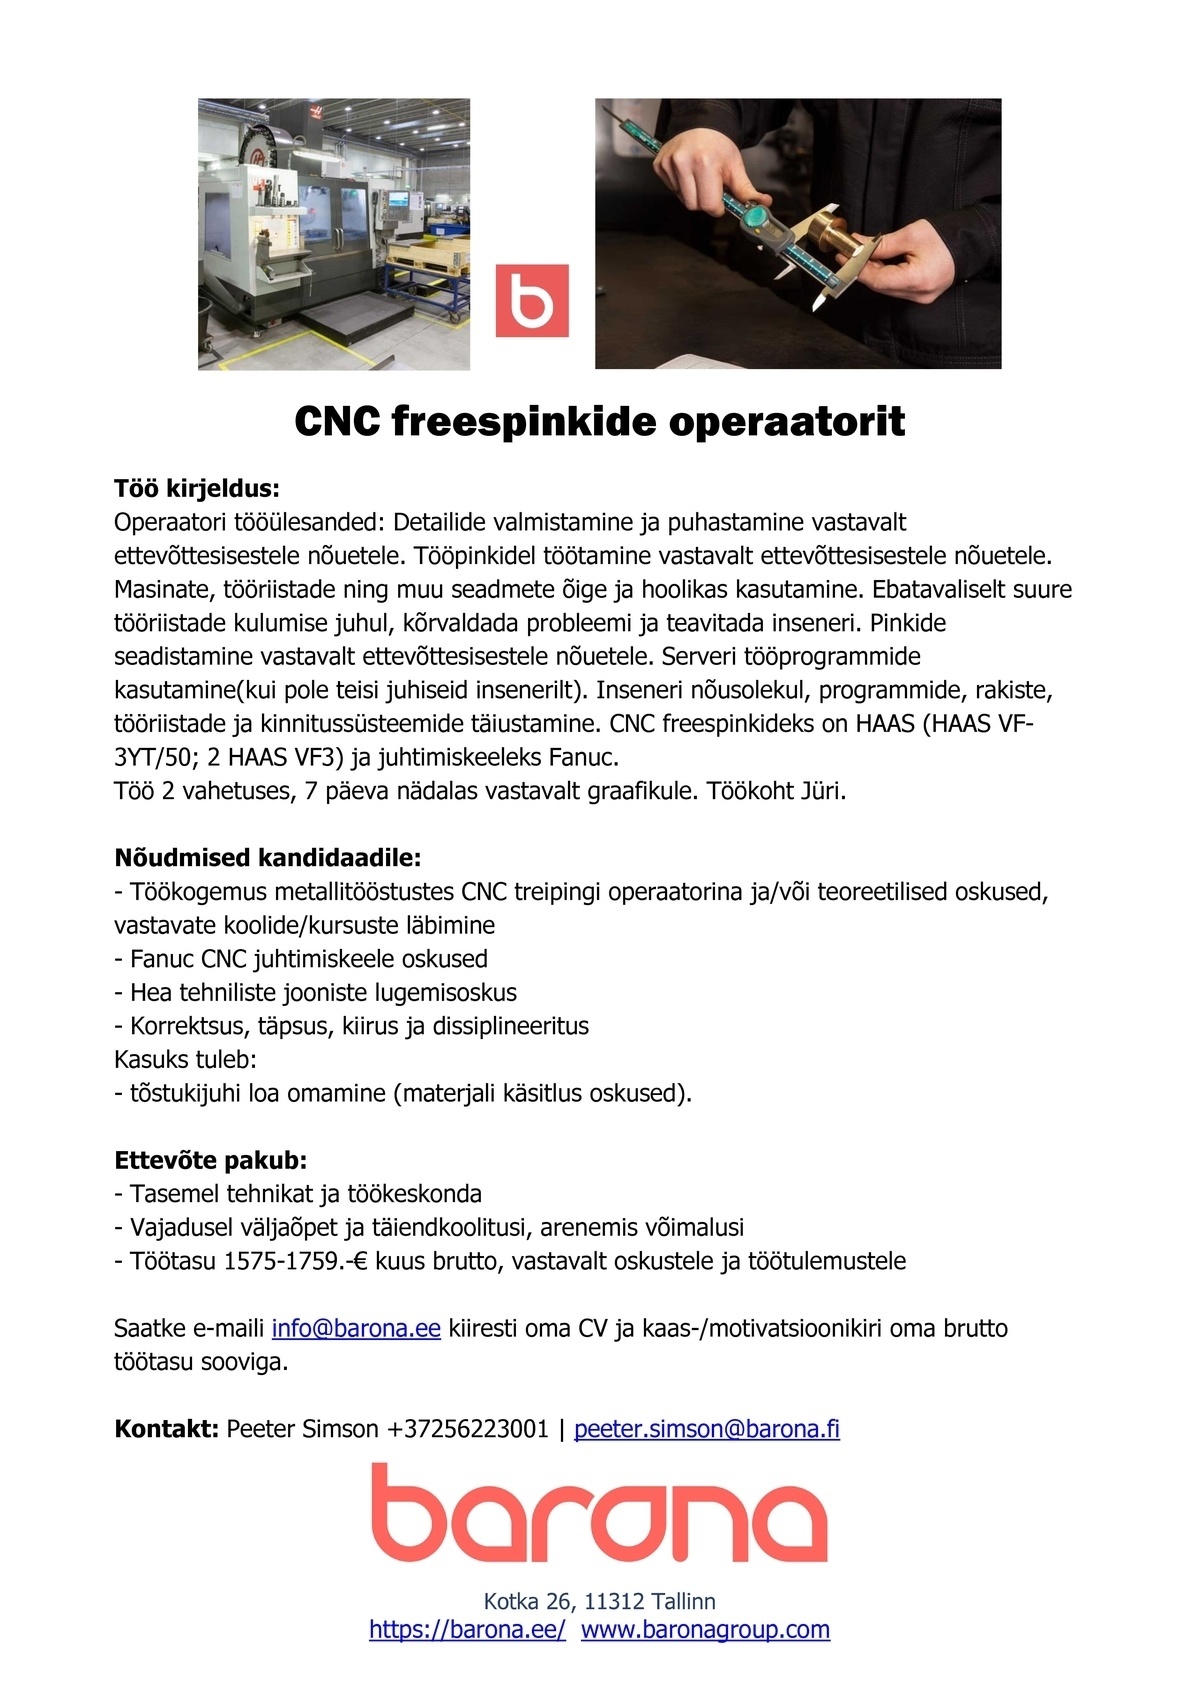 Barona Eesti OÜ CNC freespingi operaator 